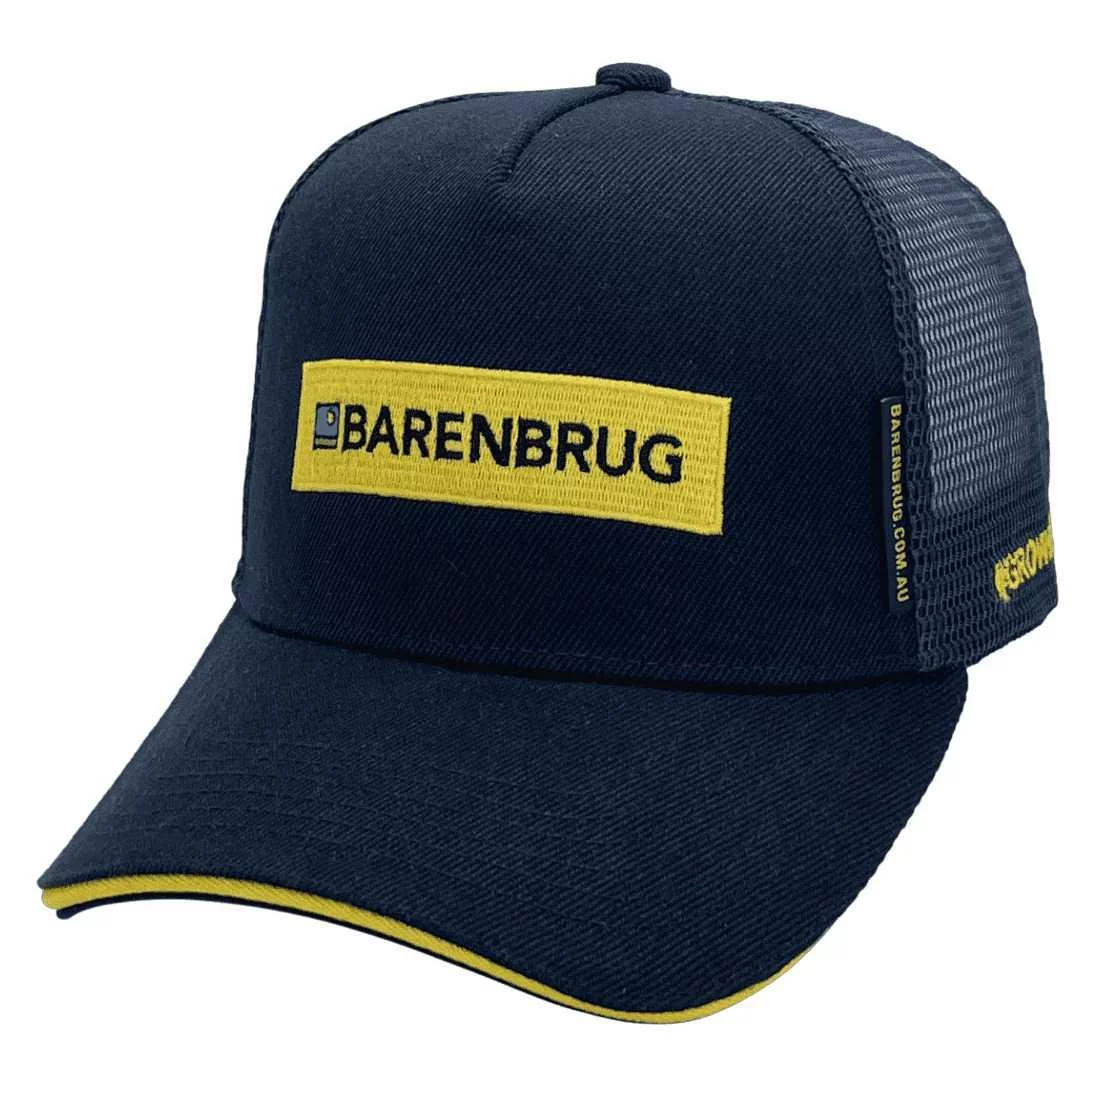 Barenbrug Dandenong South Vic Original Basic Aussie Trucker Hat with Australian Head Fit Crown Size and Sandwich Brim